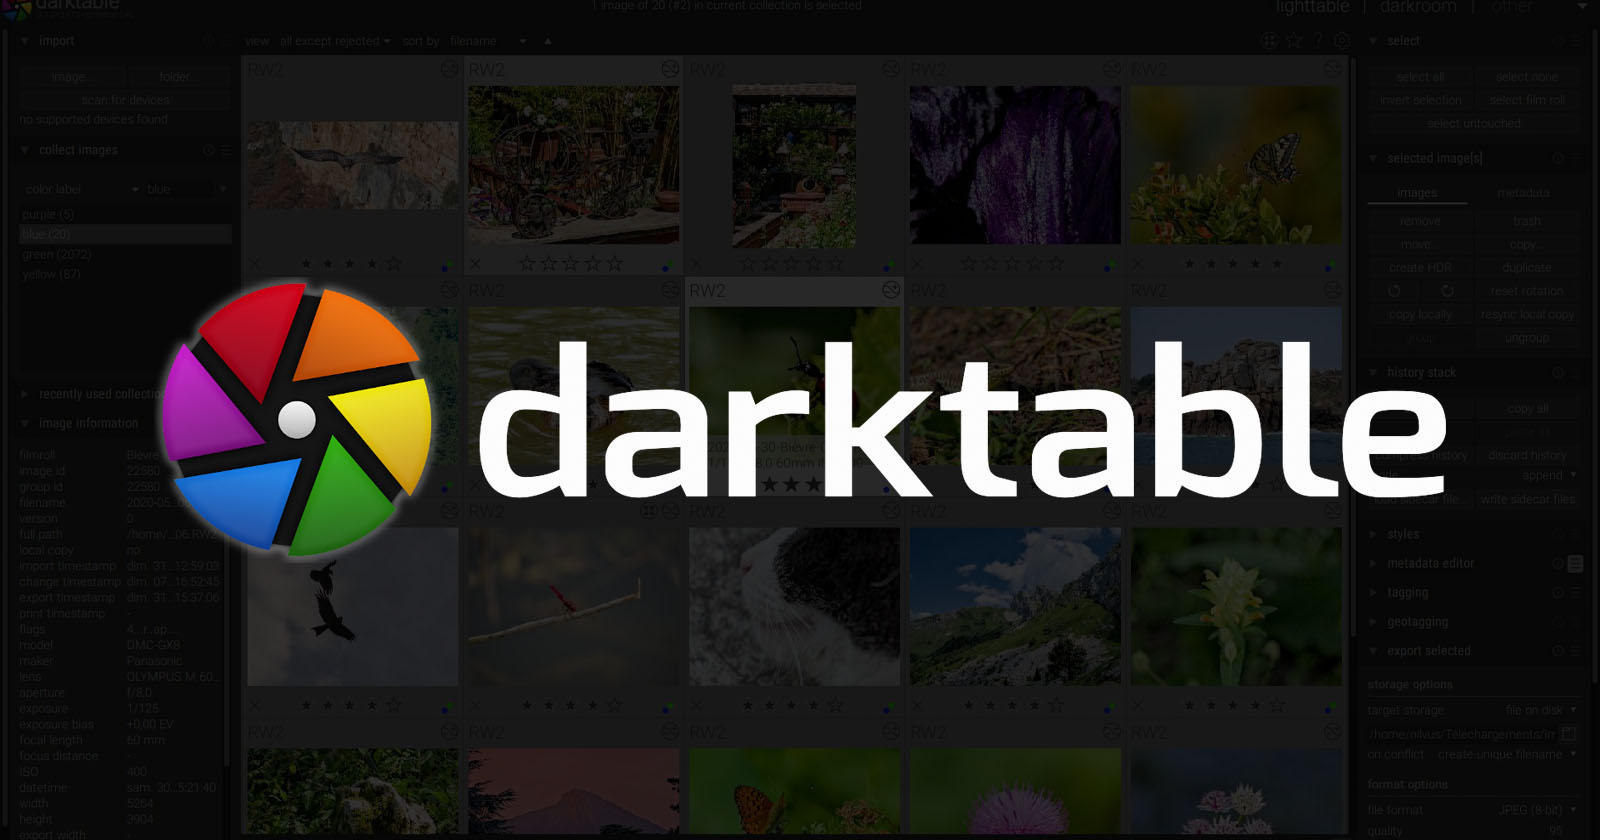 darktable